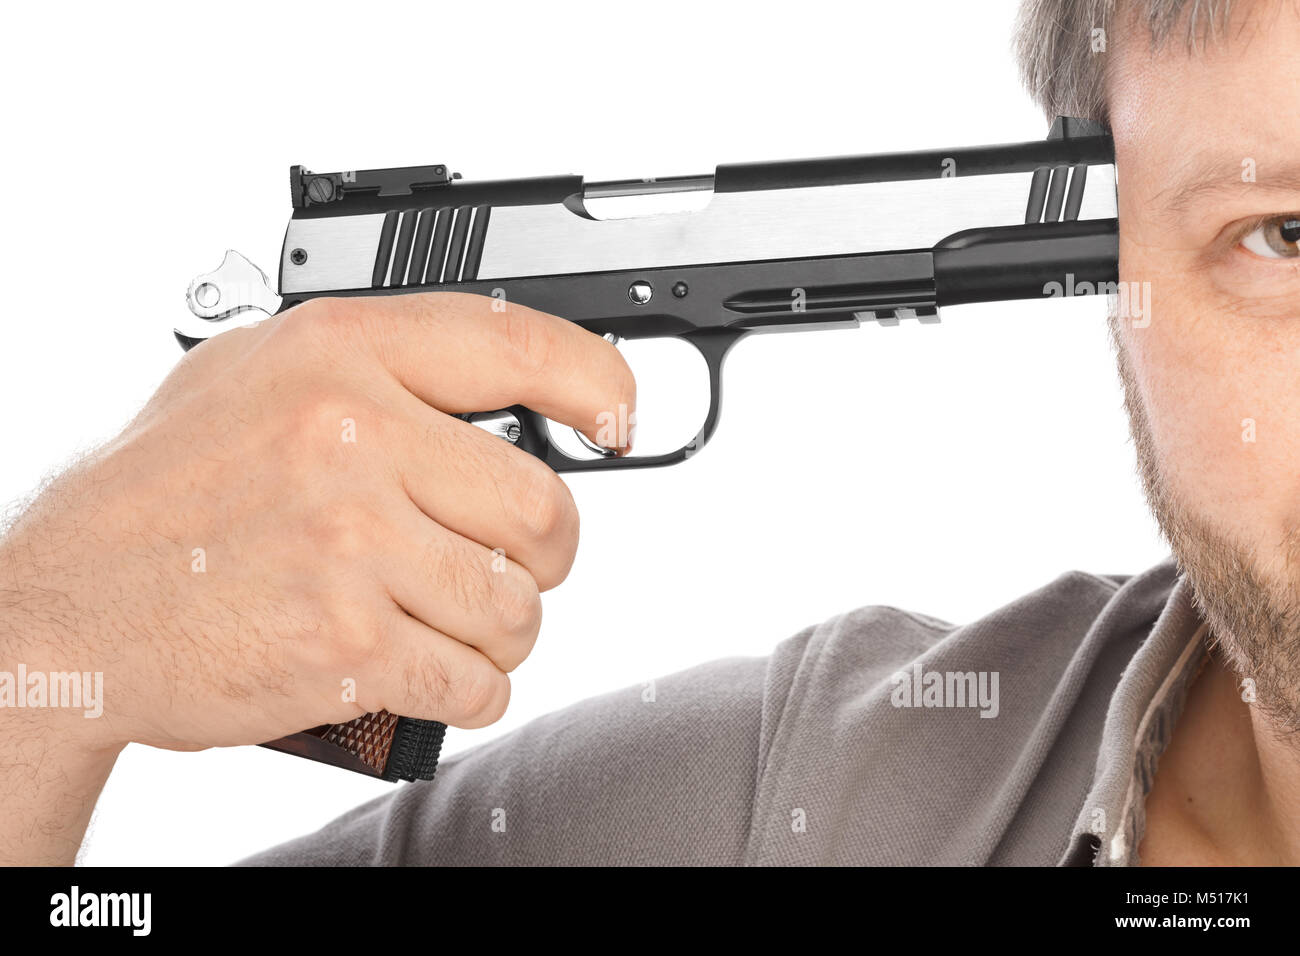 Man tries to shoot himself Stock Photo